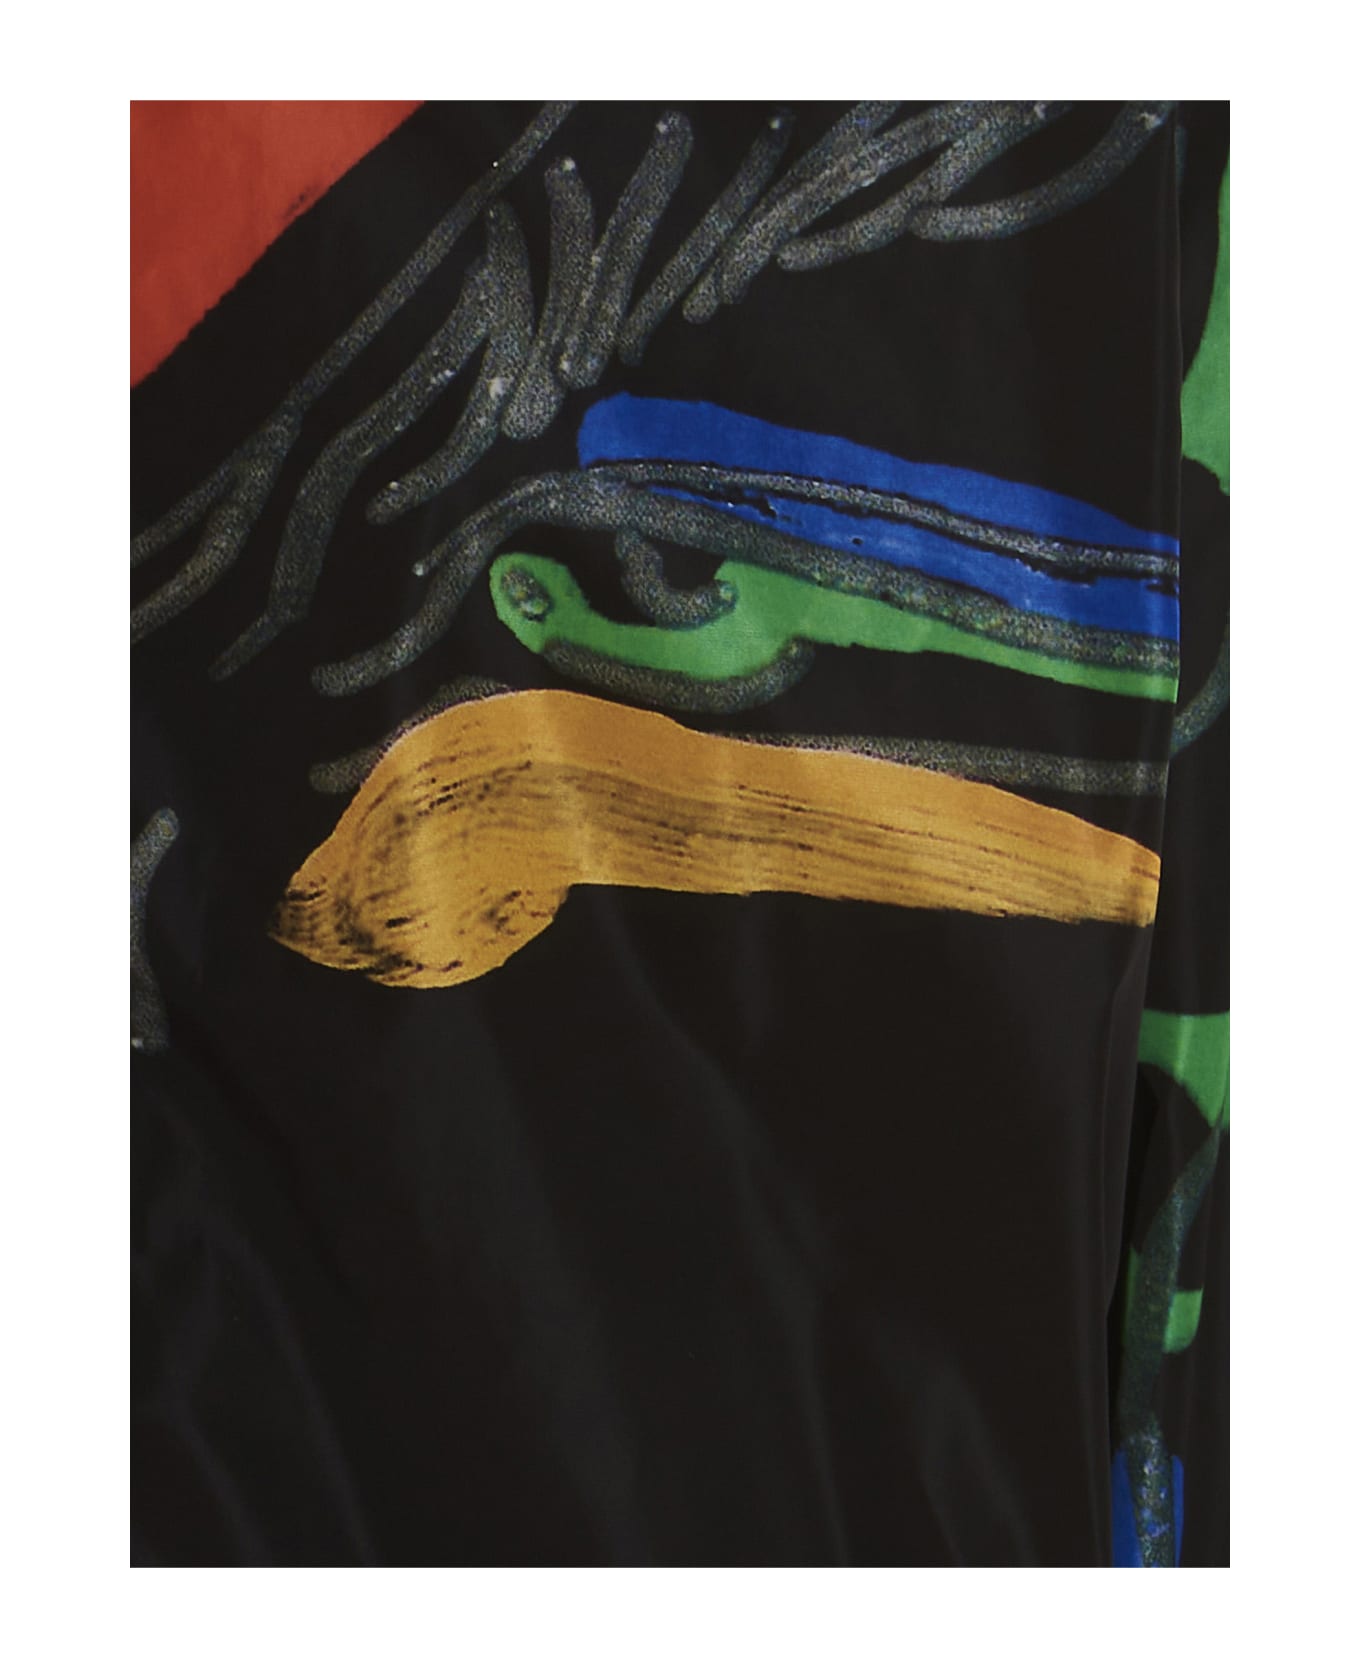 Moschino Printed Nylon Jacket - Multicolor